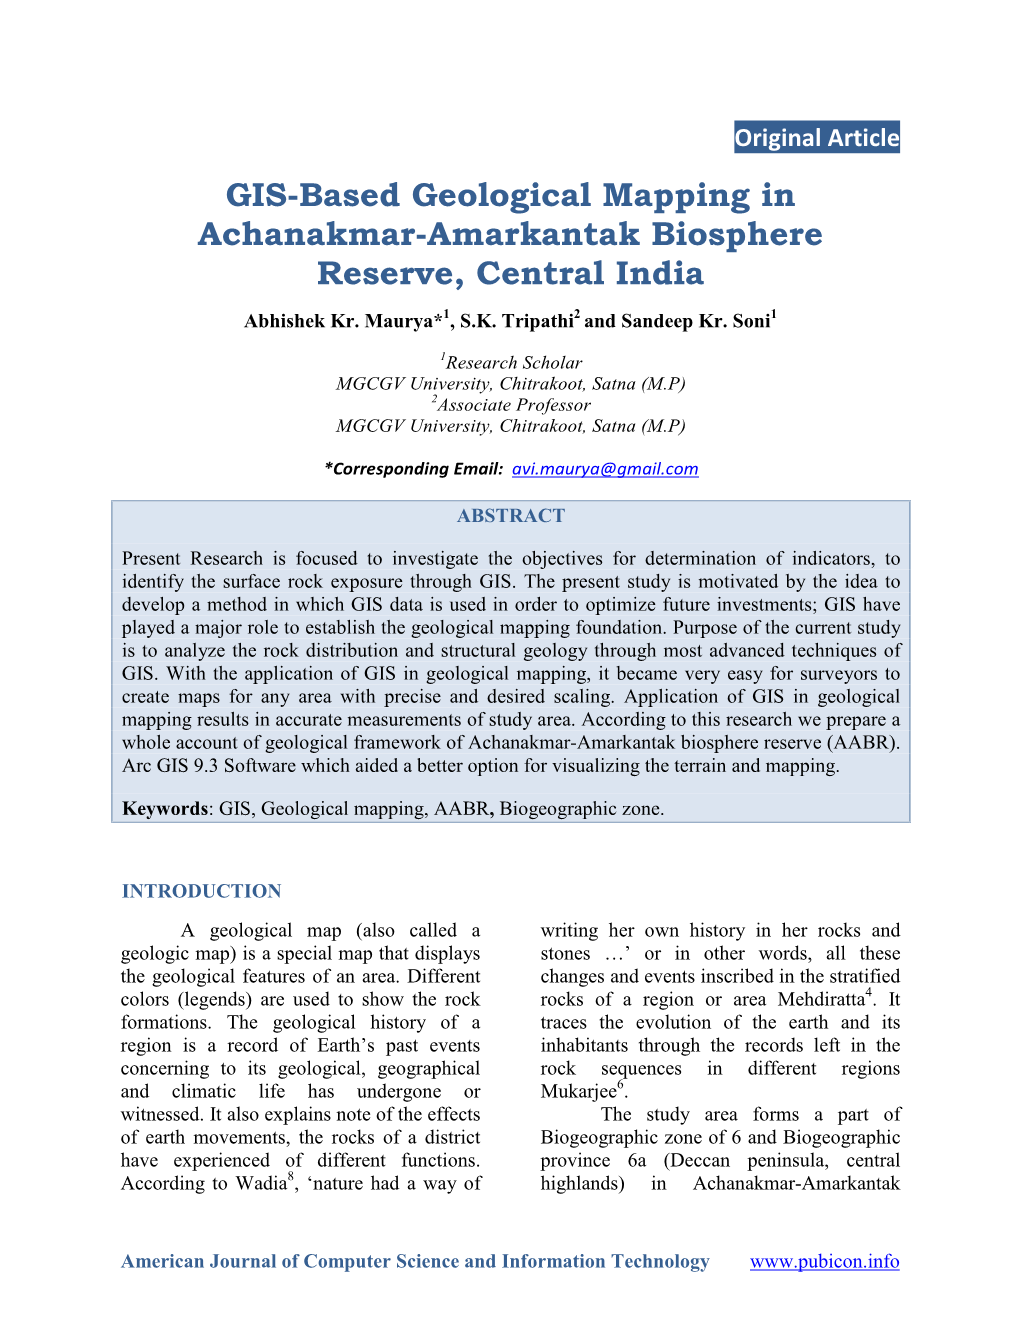 GIS-Based Geological Mapping in Achanakmar-Amarkantak Biosphere Reserve, Central India Abhishek Kr